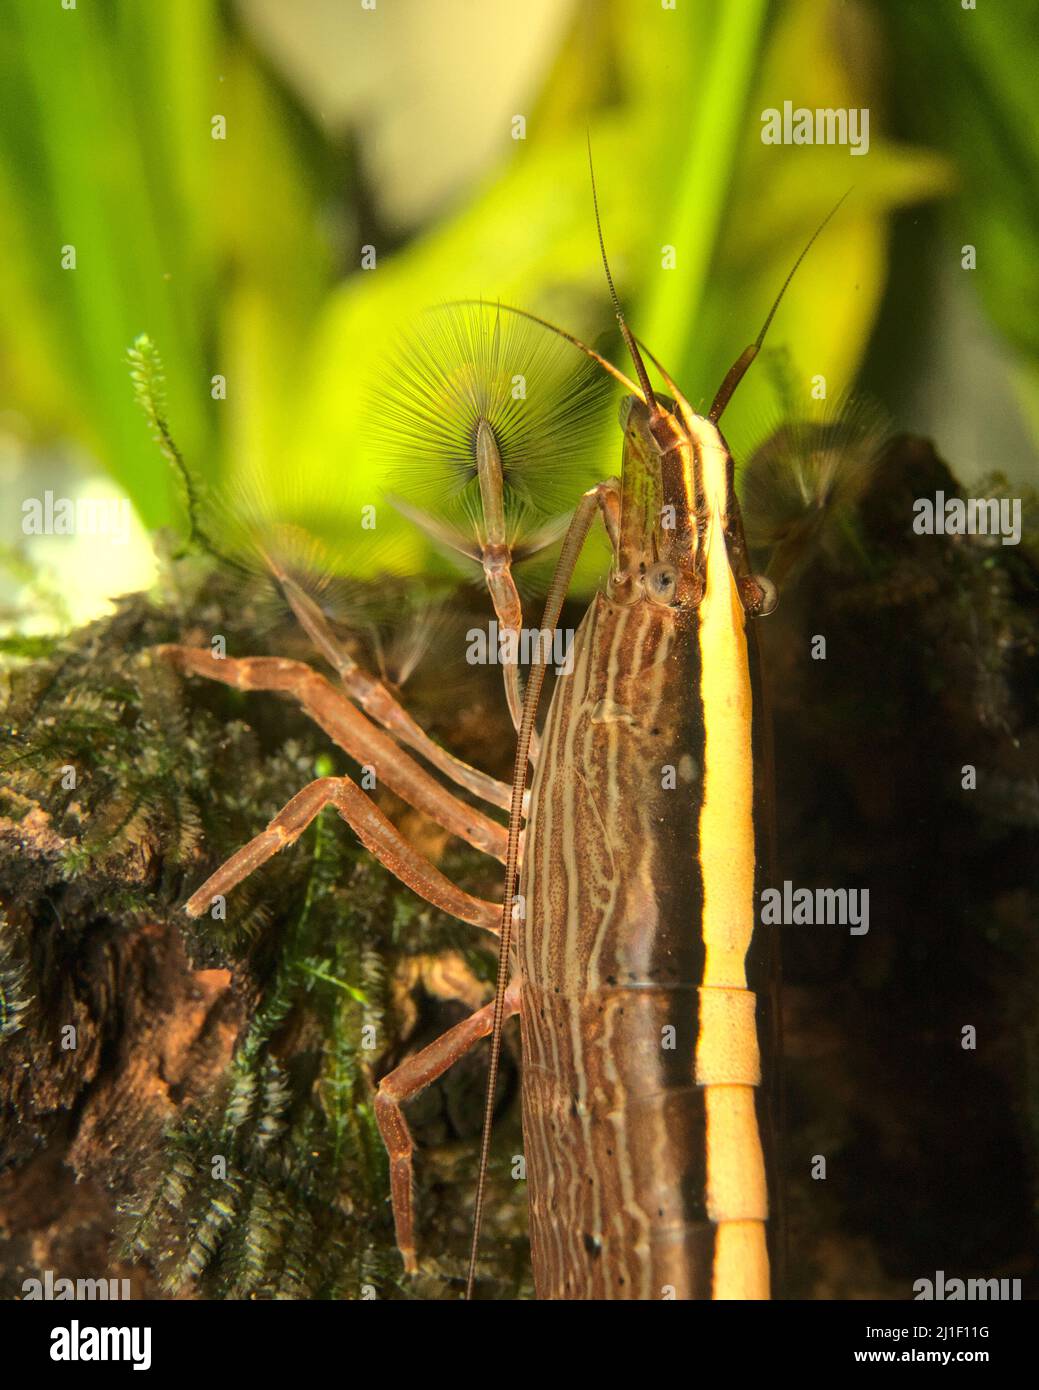 Closeup of female bamboo shrimp using fans for feeding Stock Photo